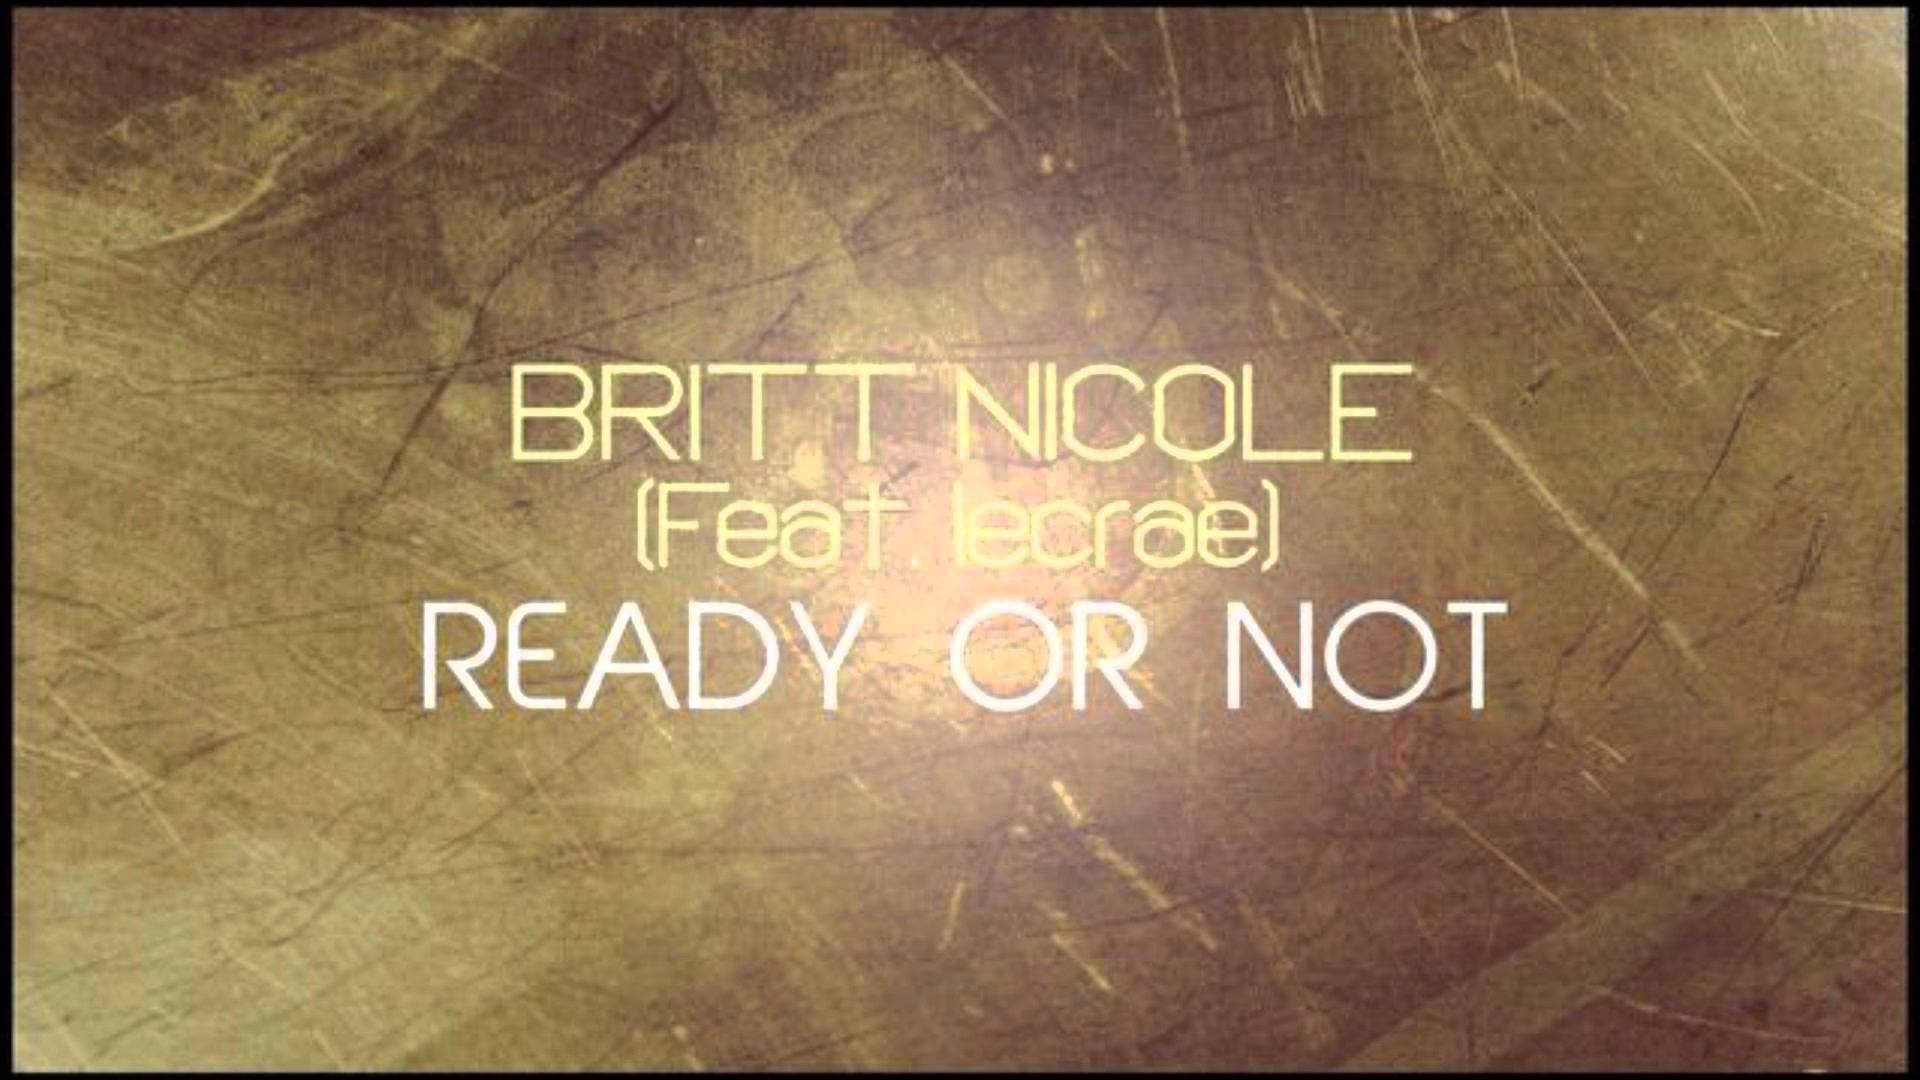 Lyrics for Ready or Not by Britt Nicole (featuring Lecrae)